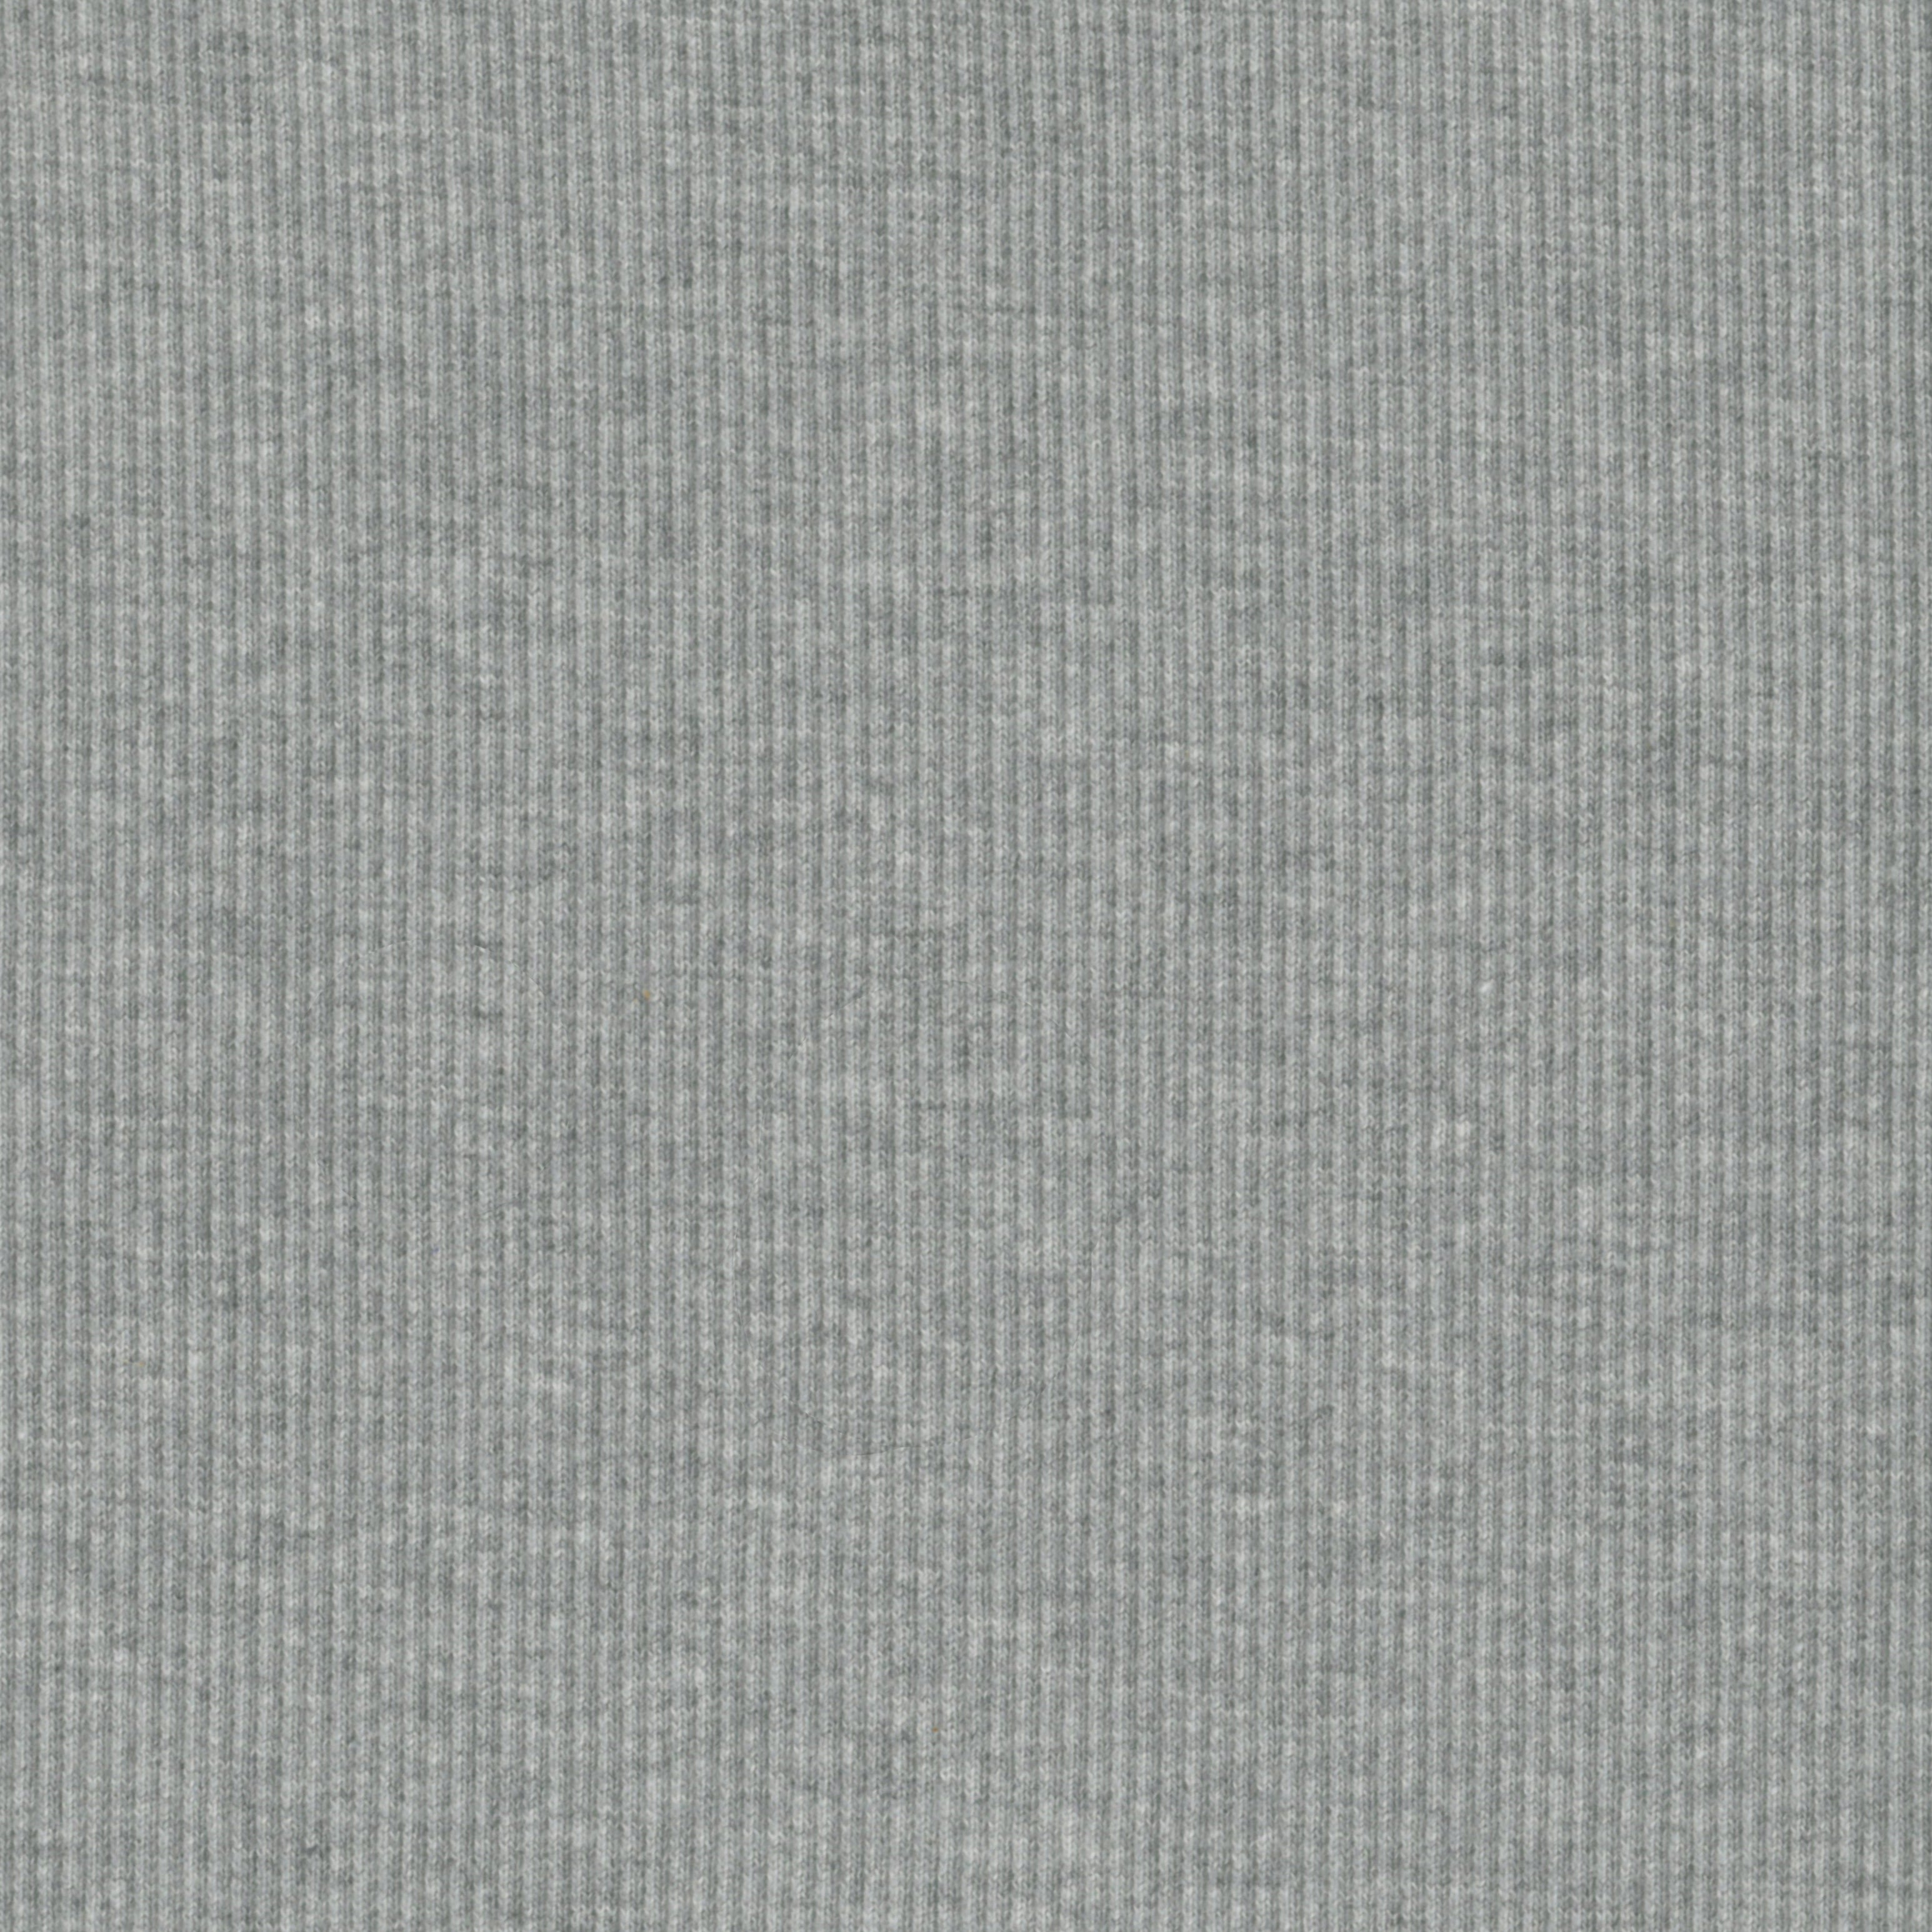 95% Cotton 5% Elastane Ribbing in Dark Navy Blue 240GSM, Solid, OEKO-TEX 100